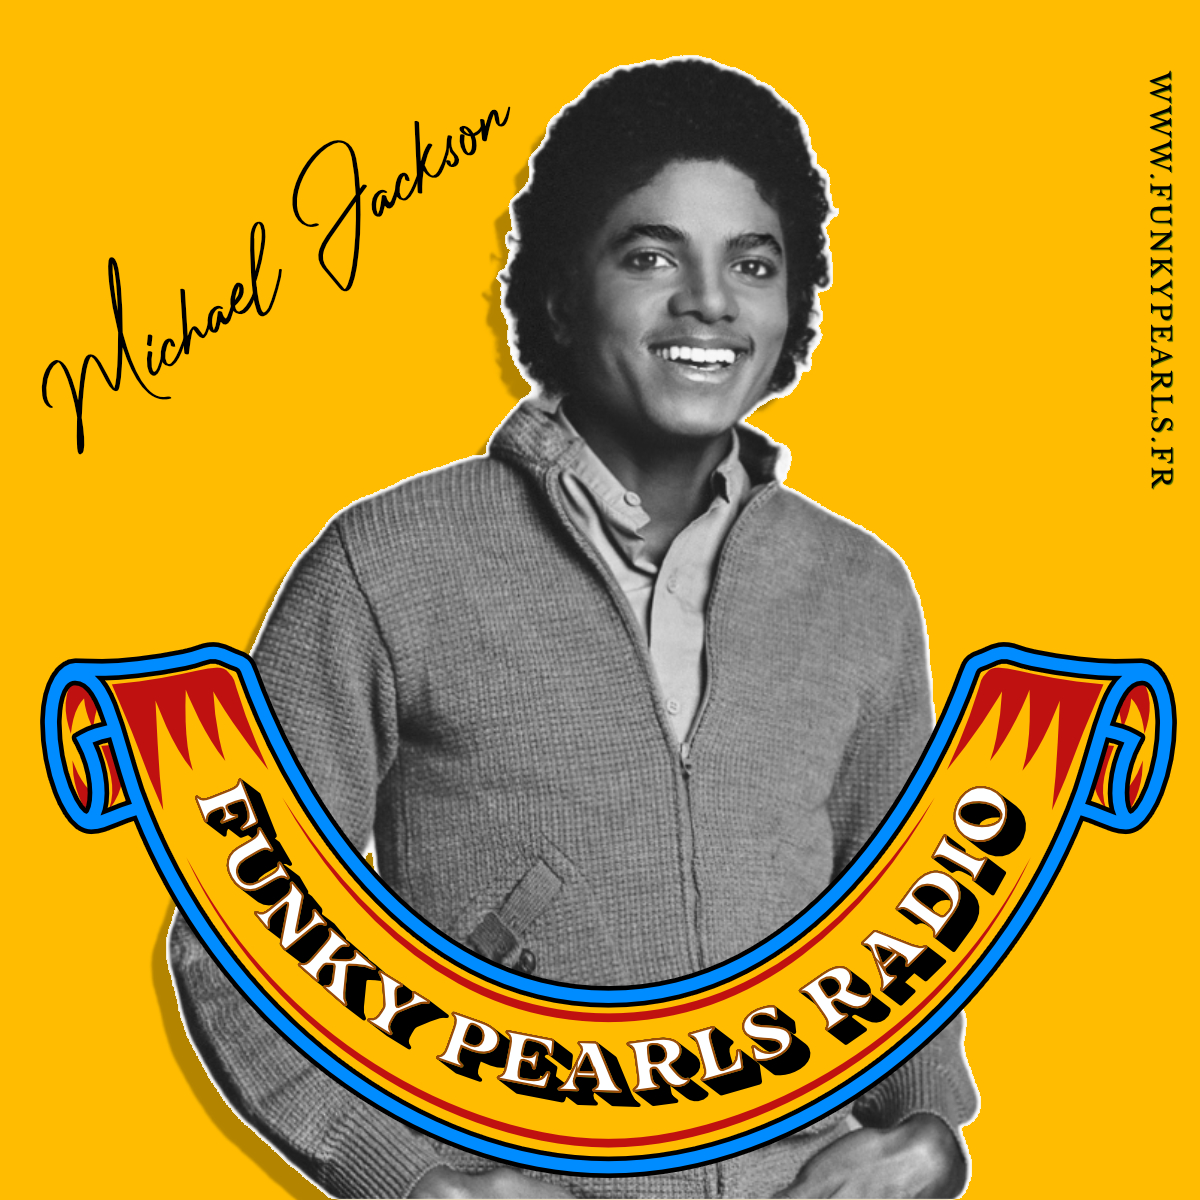 i.mtr.cool/rtsmbeqxko Beat it de Michael Jackson : comment cette chanson a révolutionné l'industrie musicale! #beatit #MichaelJackson #radiofunk #funkypearls #radio #webradio